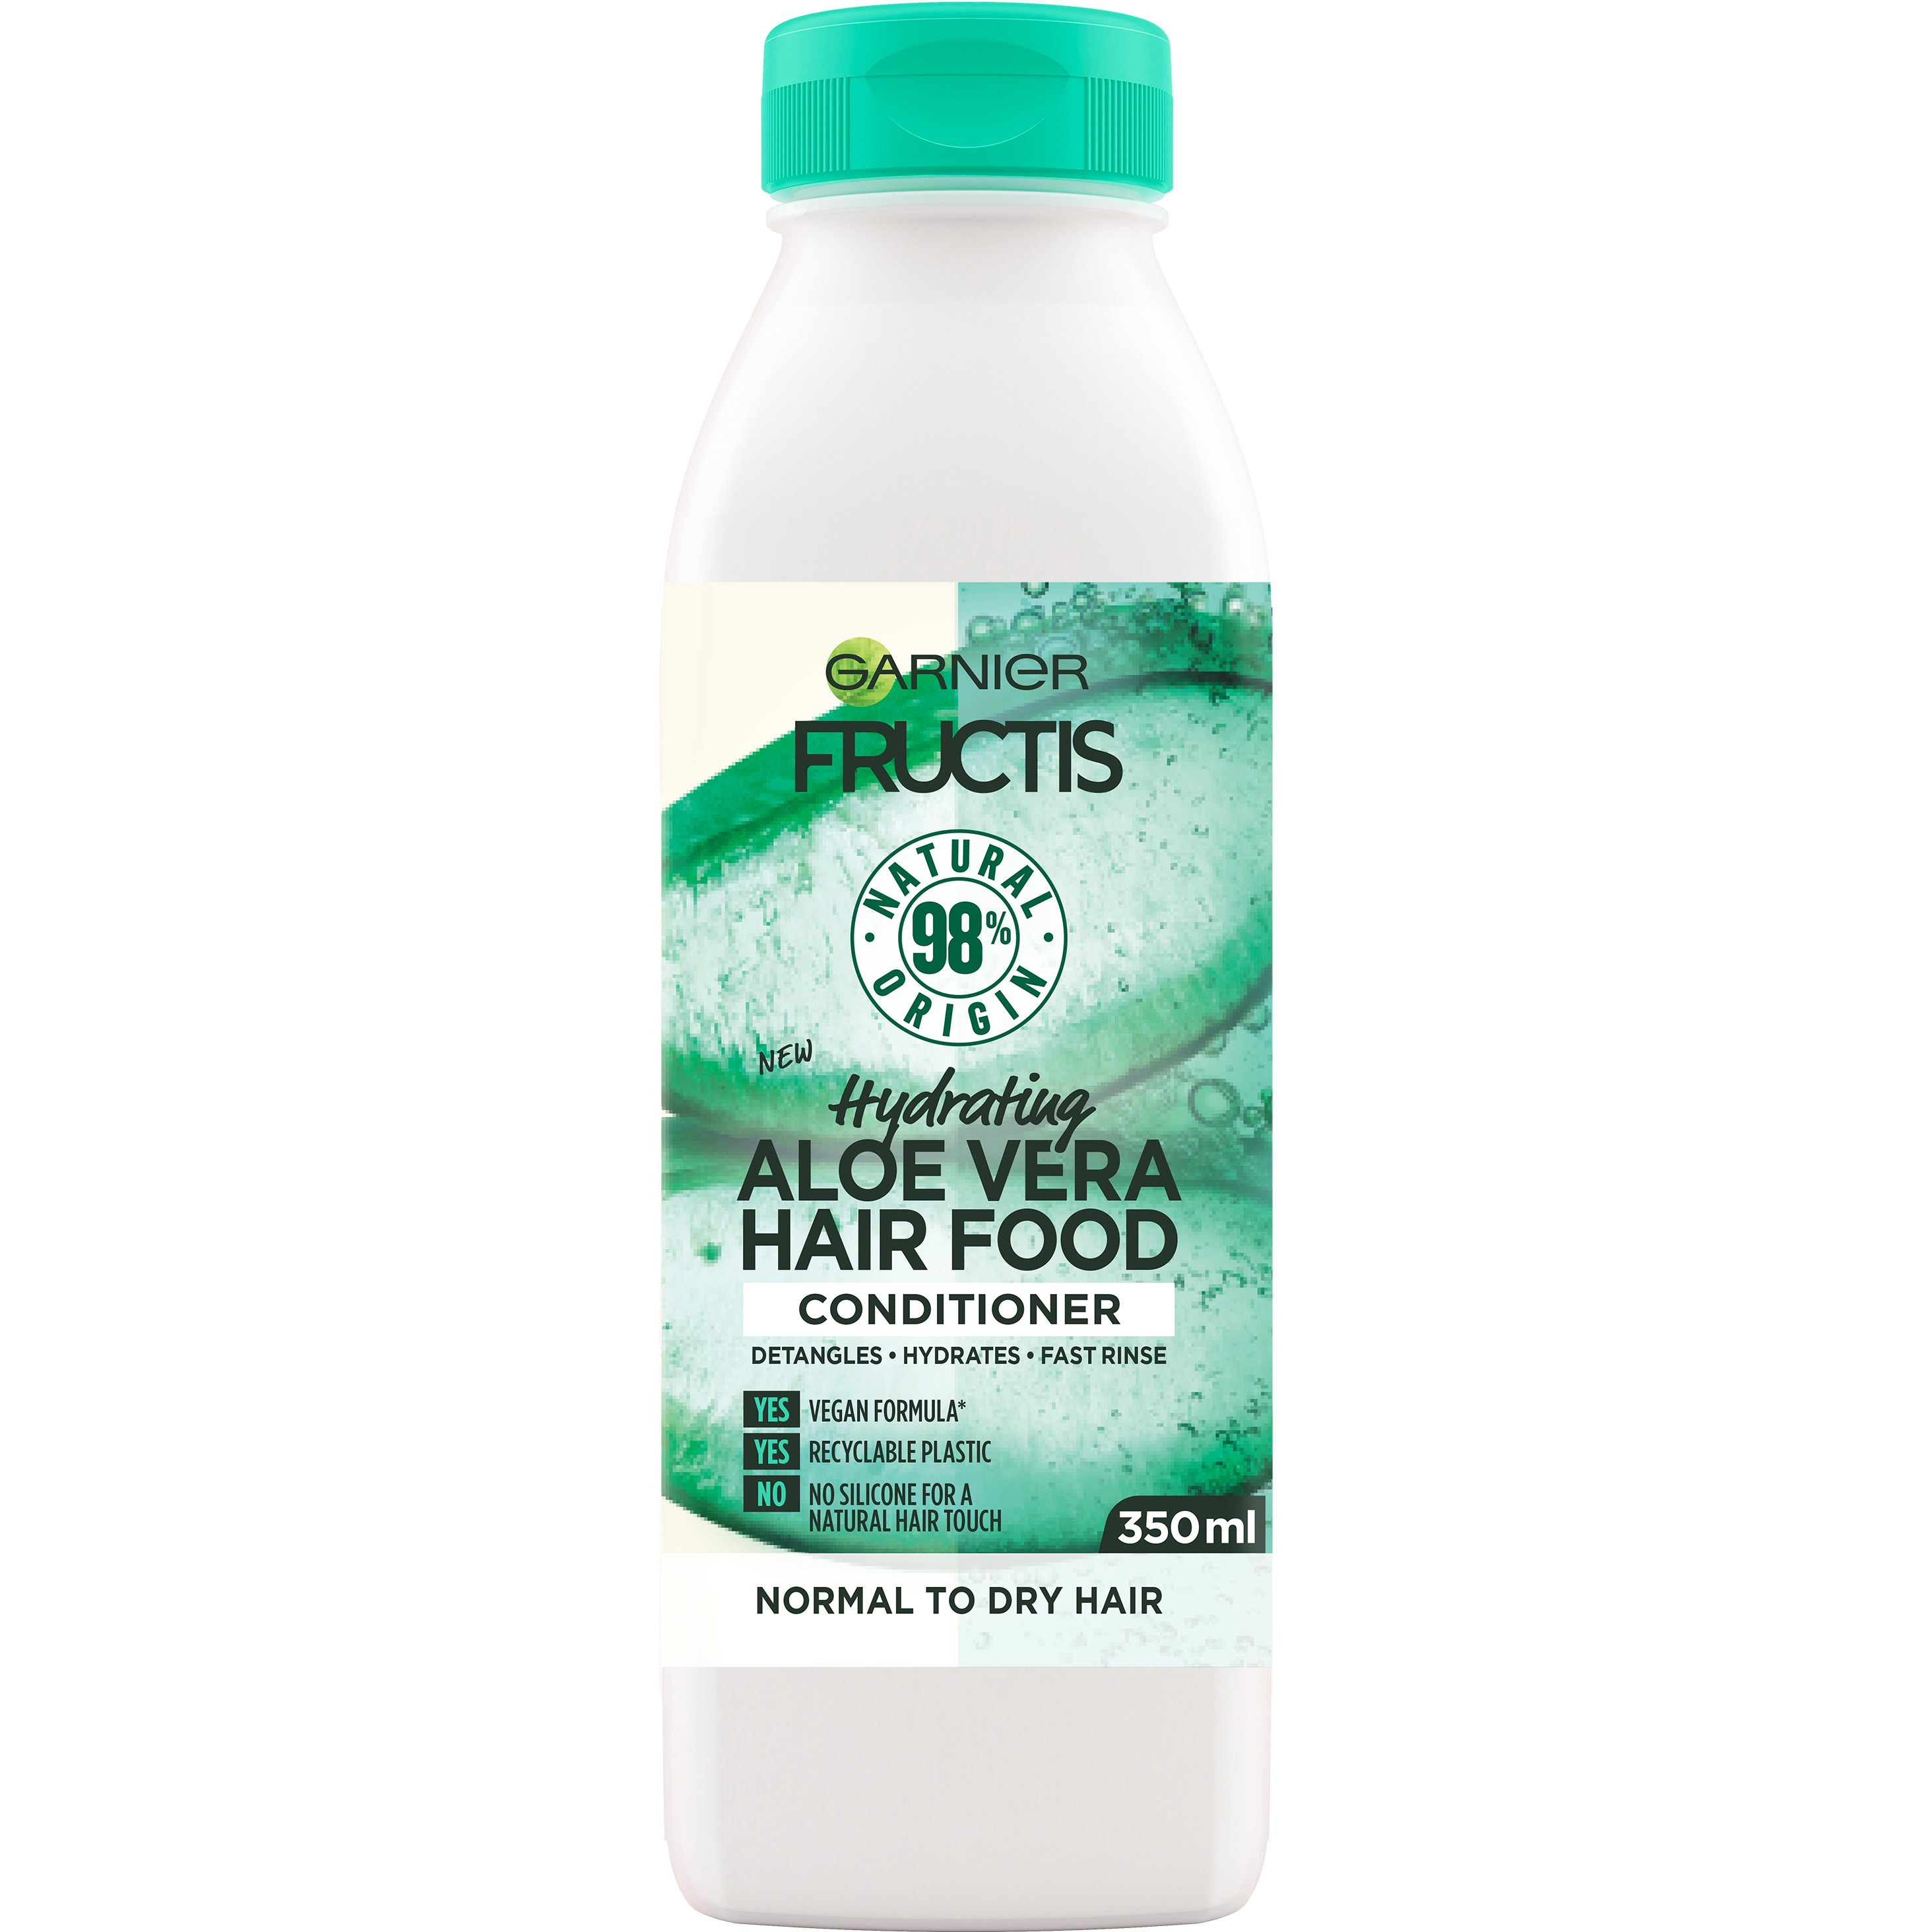 Garnier Fructis Hydrating Conditioner Aloe Vera Hair Food 350 ml